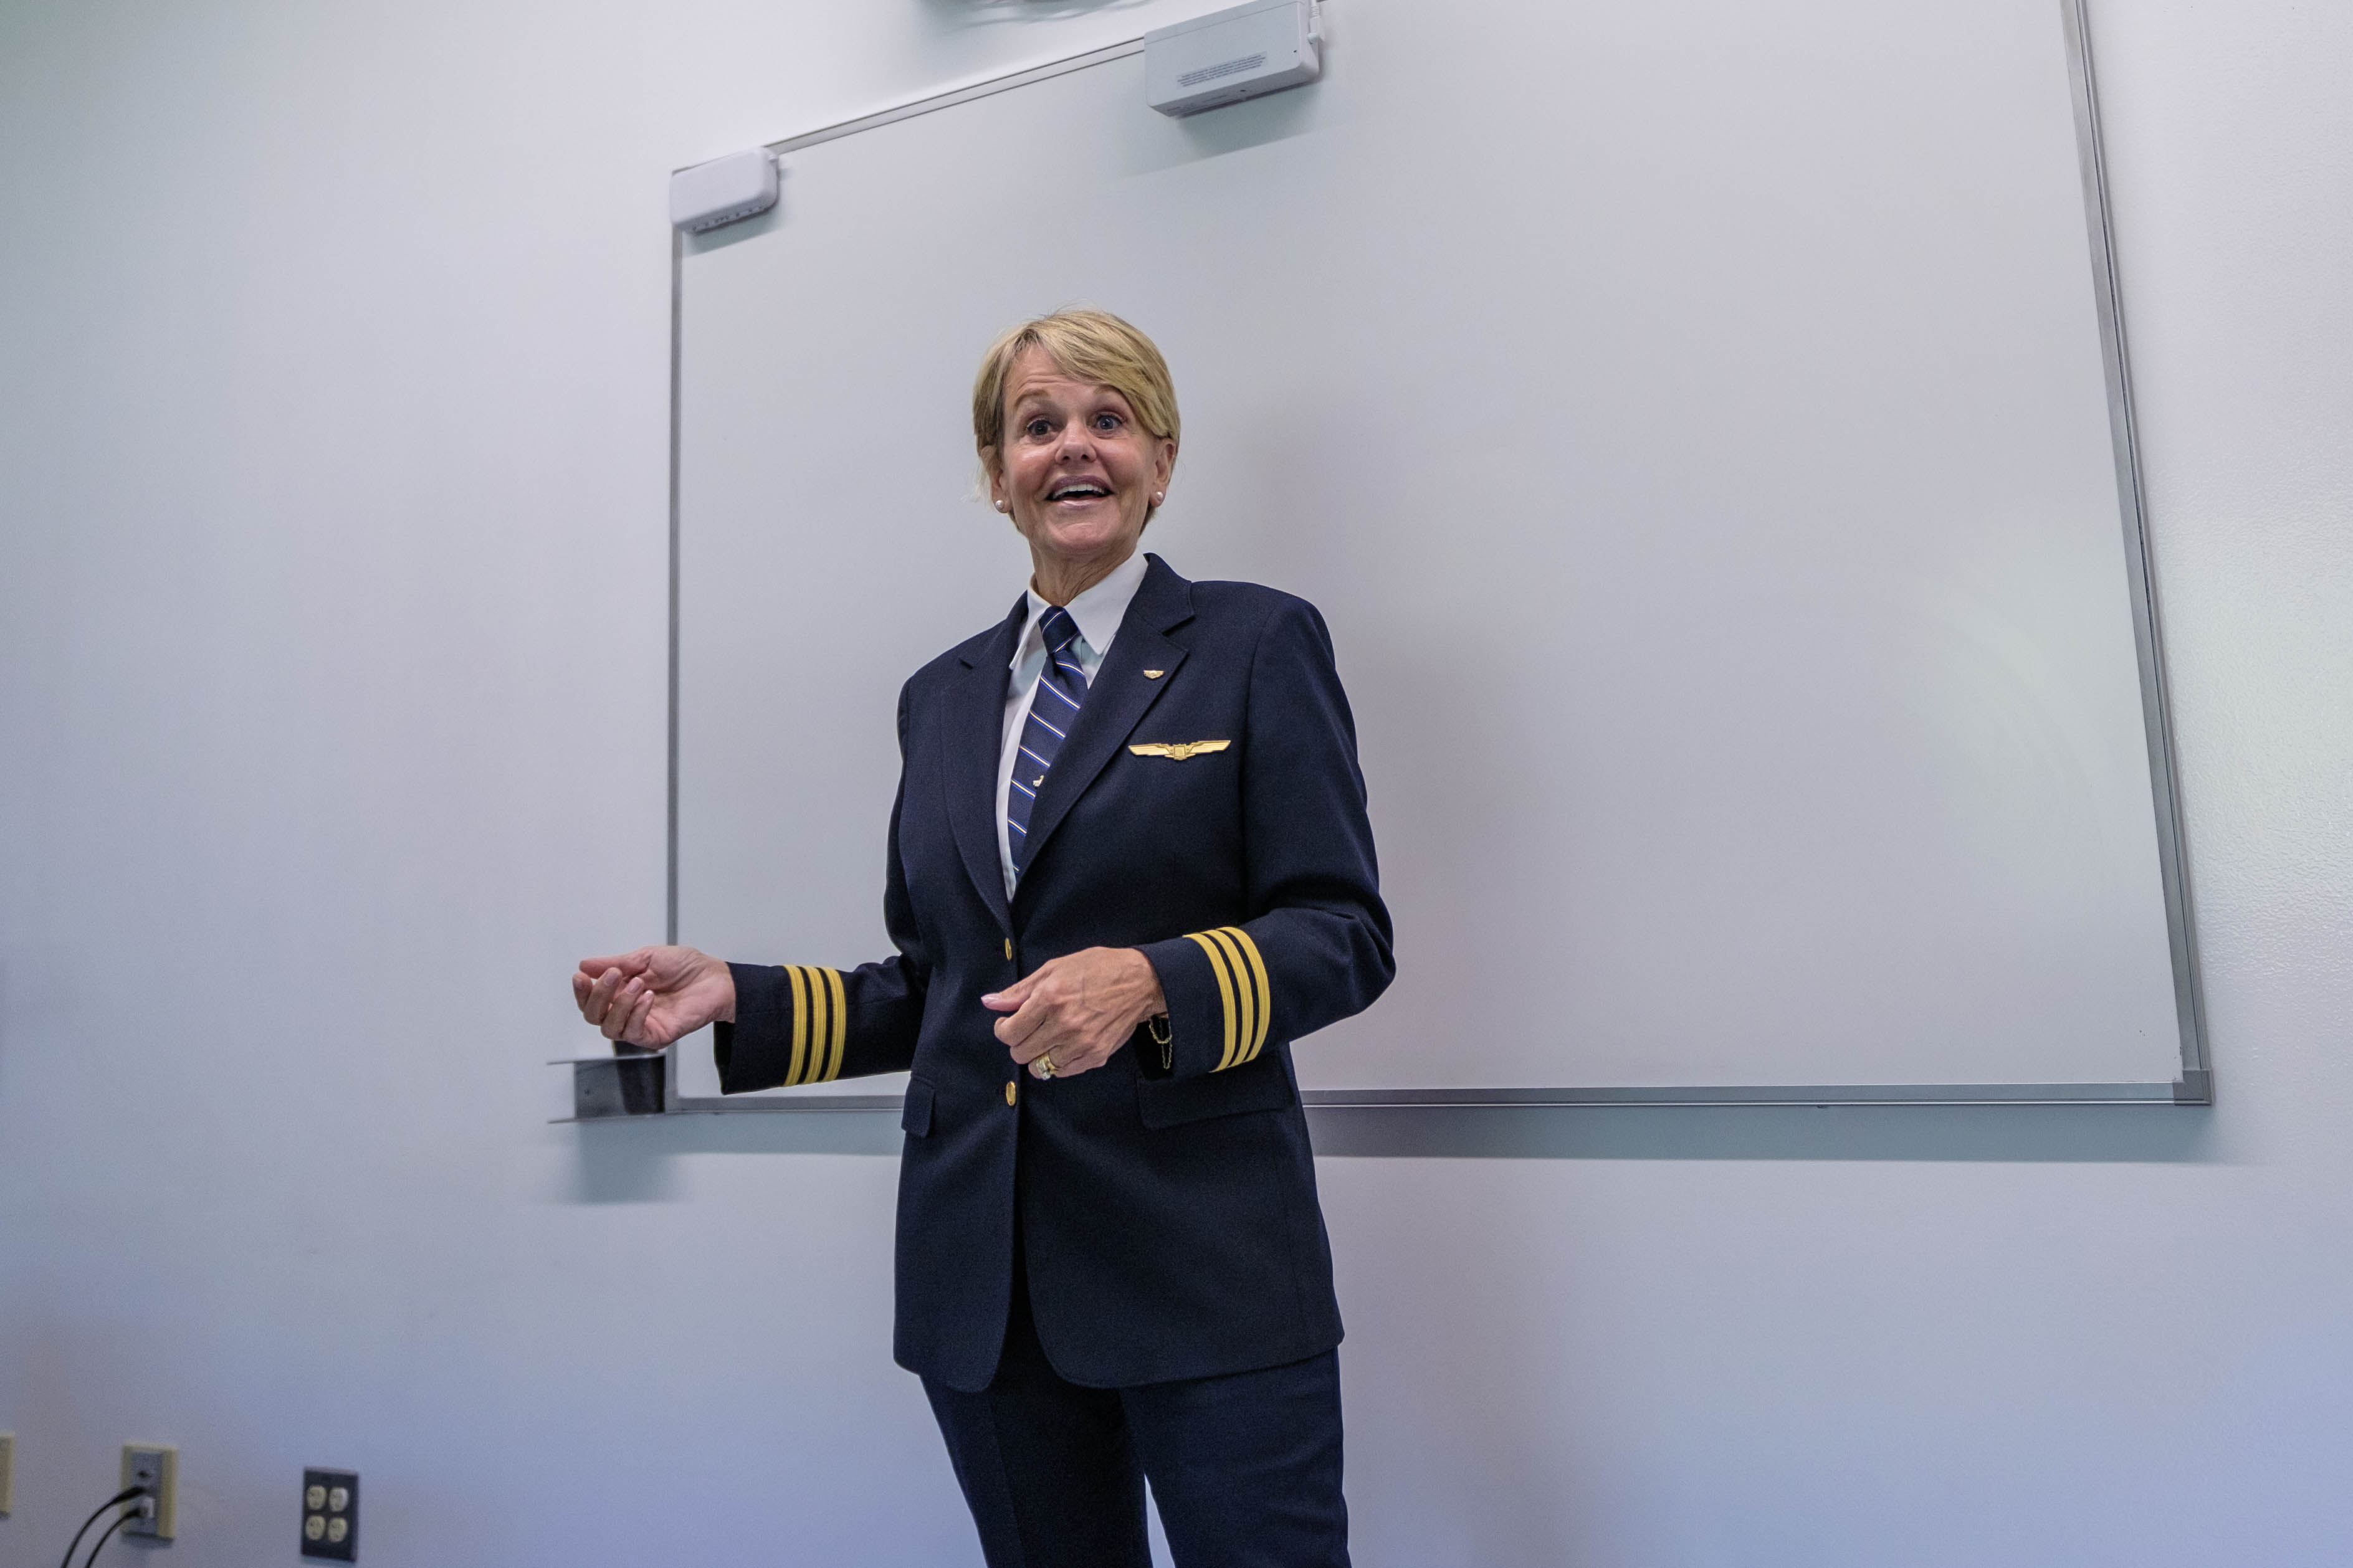 United Airlines pilot Cheryl Lynn Simpson